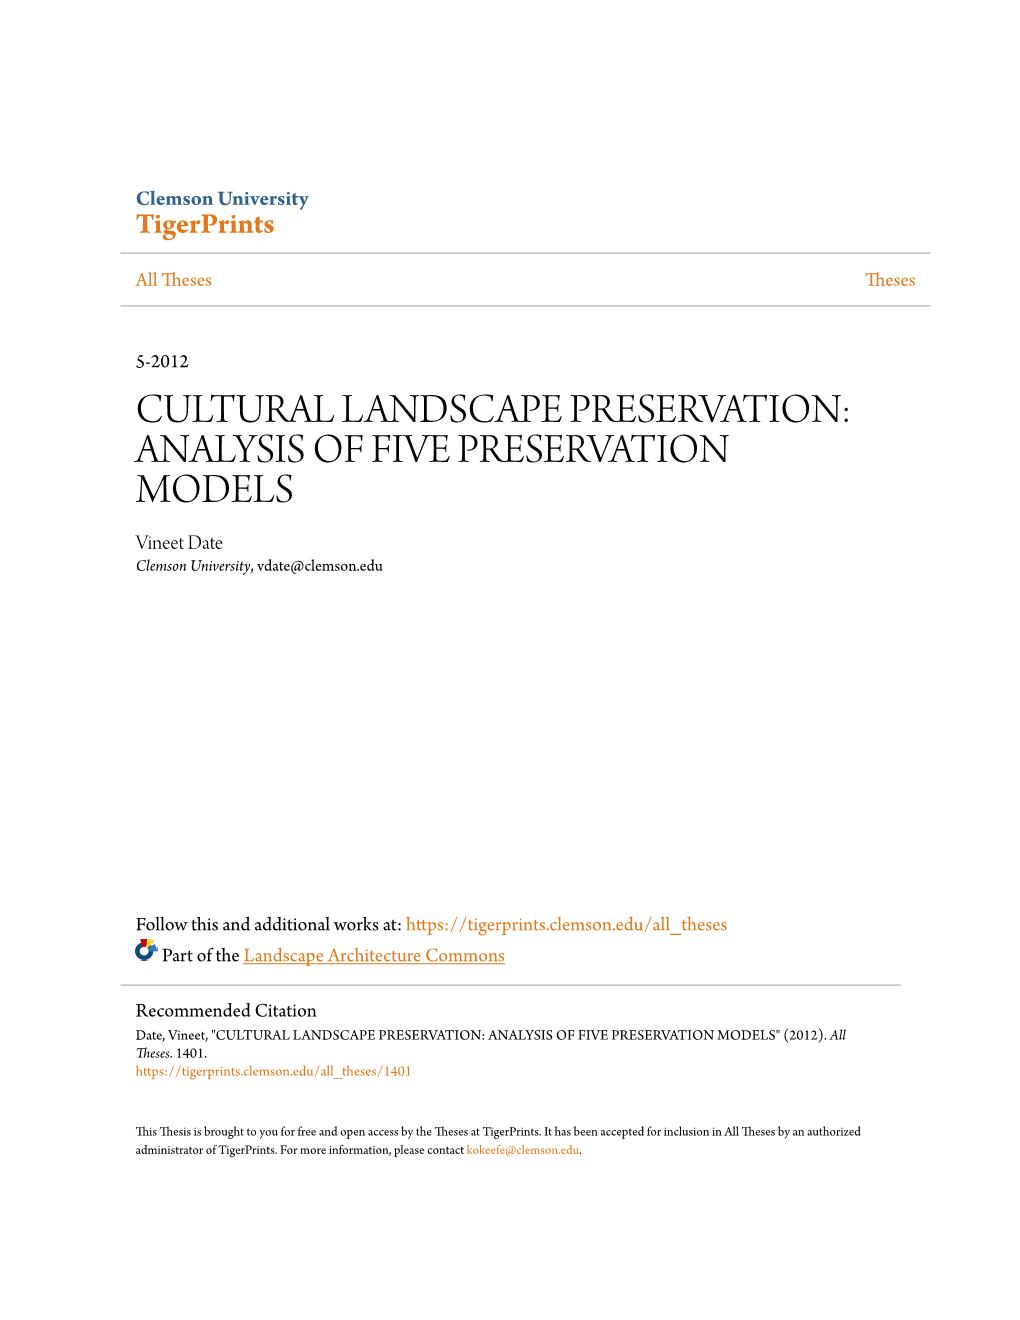 CULTURAL LANDSCAPE PRESERVATION: ANALYSIS of FIVE PRESERVATION MODELS Vineet Date Clemson University, Vdate@Clemson.Edu